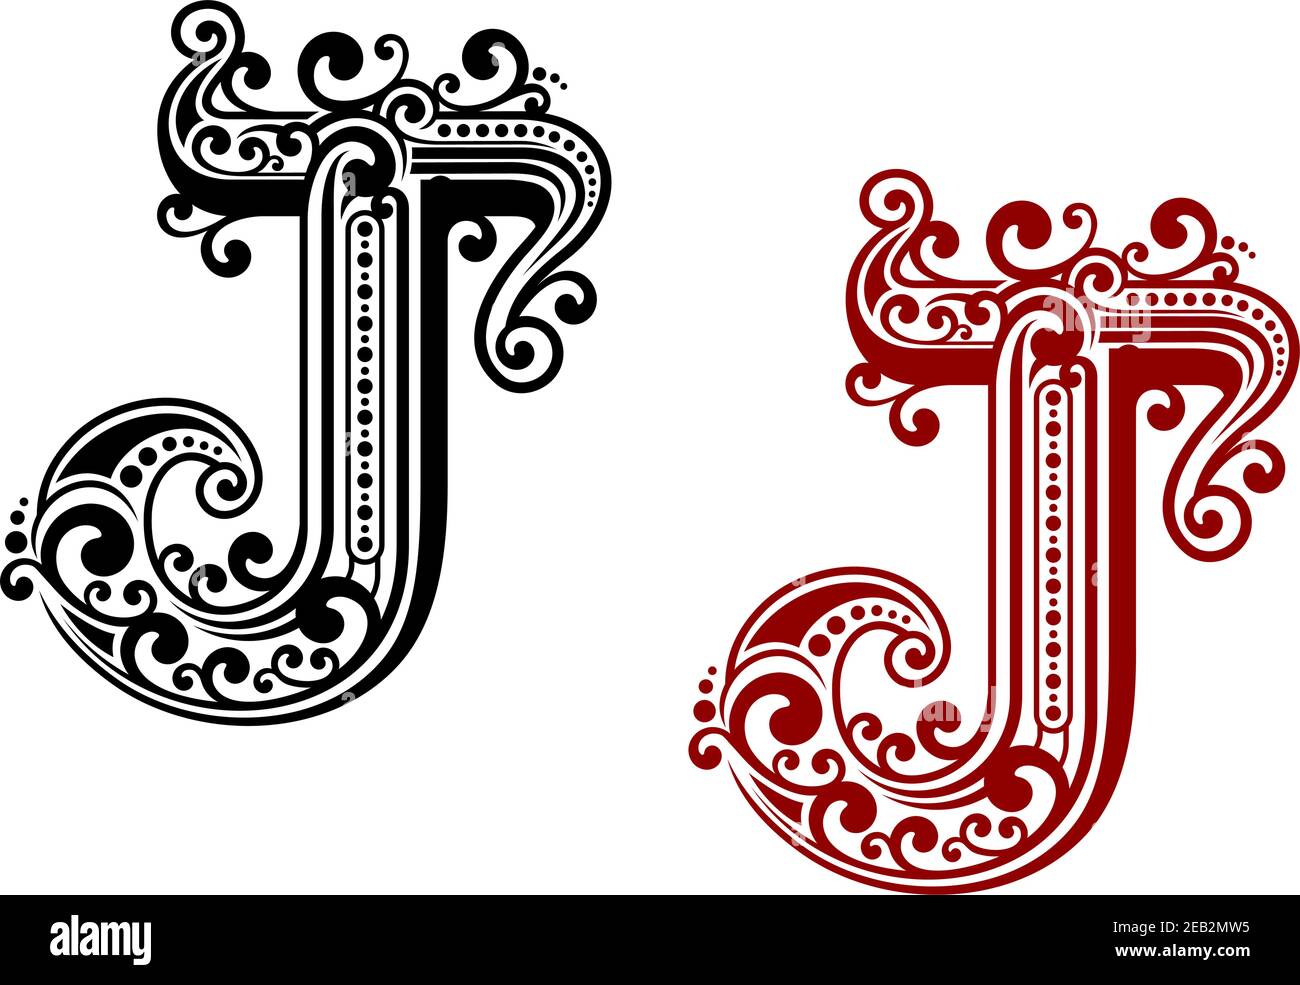 J maiuscola vintage in stile monogramma medievale, adornata da intricate linee tortuose, curlicee ed elementi decorativi calligrafici Illustrazione Vettoriale